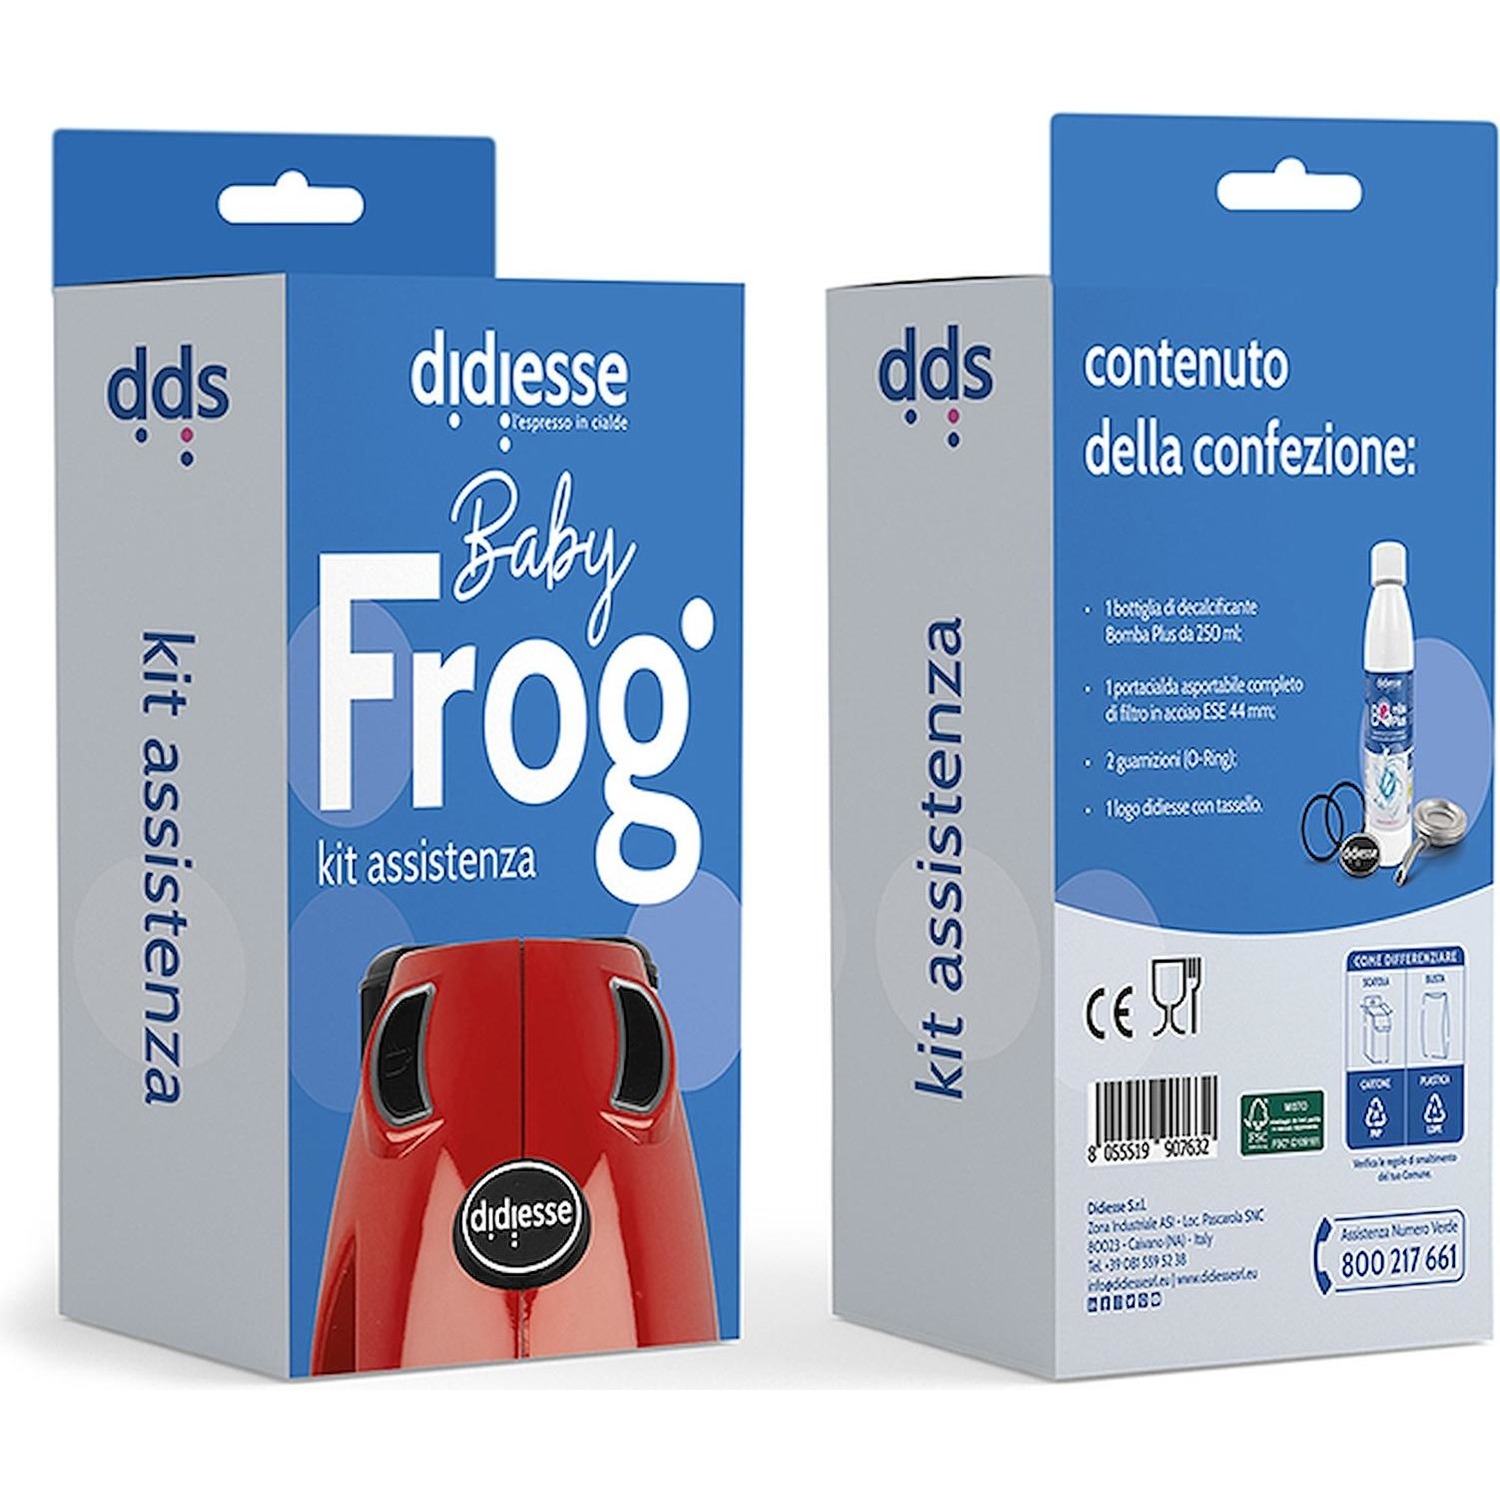 Immagine per Kit assistenza per macchina da caffè a cialde Didiesse Baby Frog con soluzione decalcificante 250ml, da DIMOStore